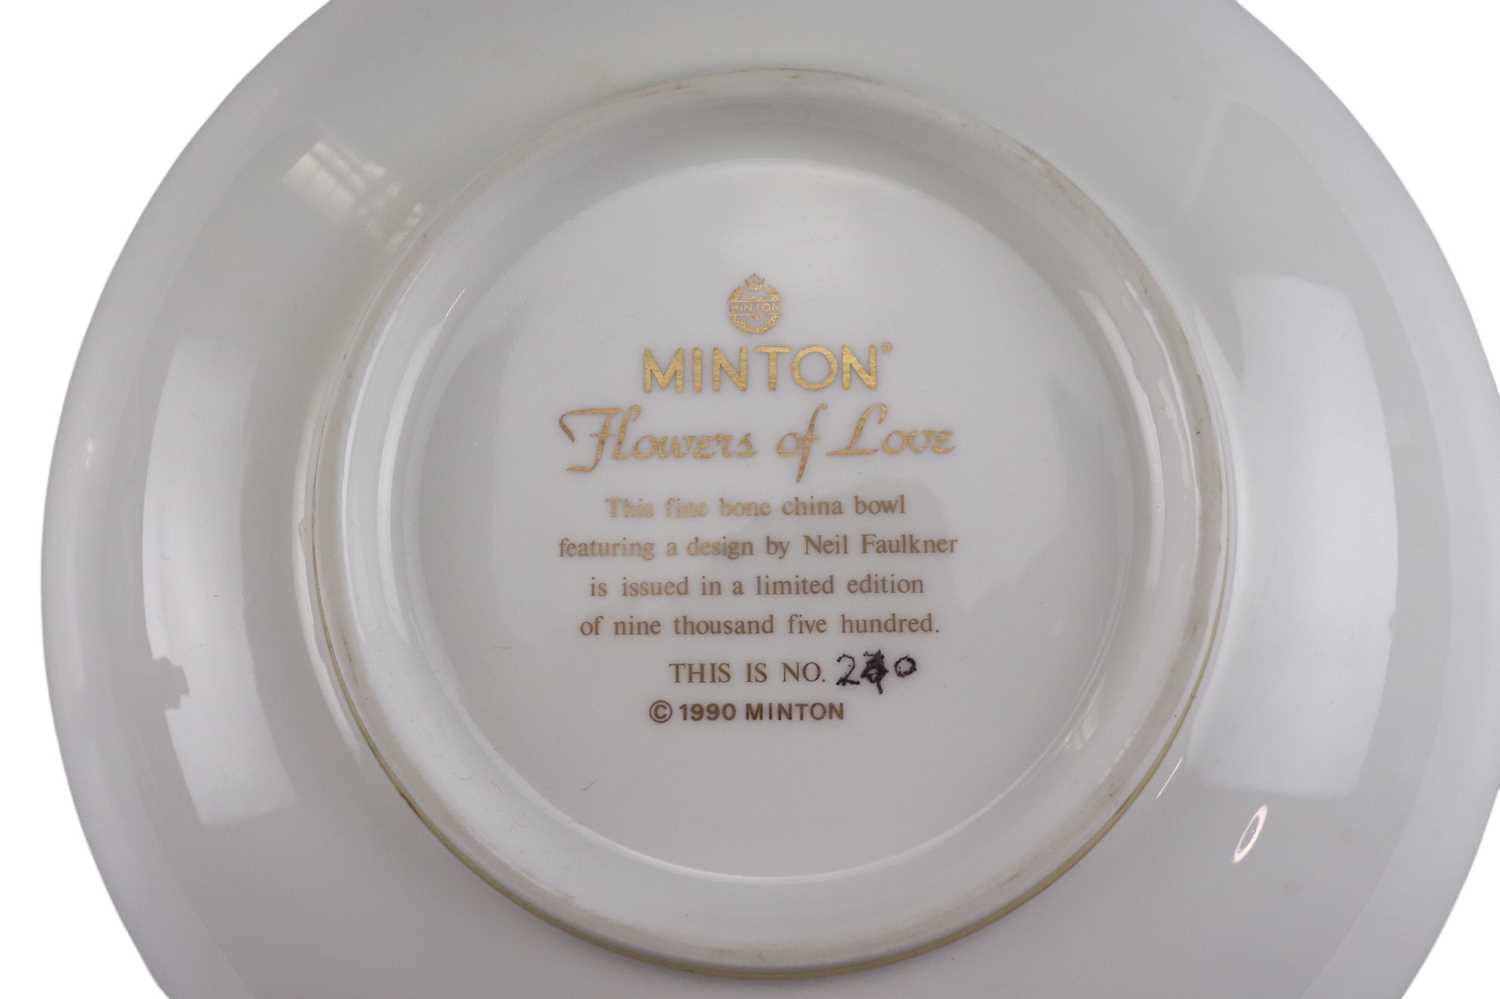 A Minton Flowers of Love Ltd Edition bowl designed by Neil Faulkner, 29 cm - Image 2 of 2